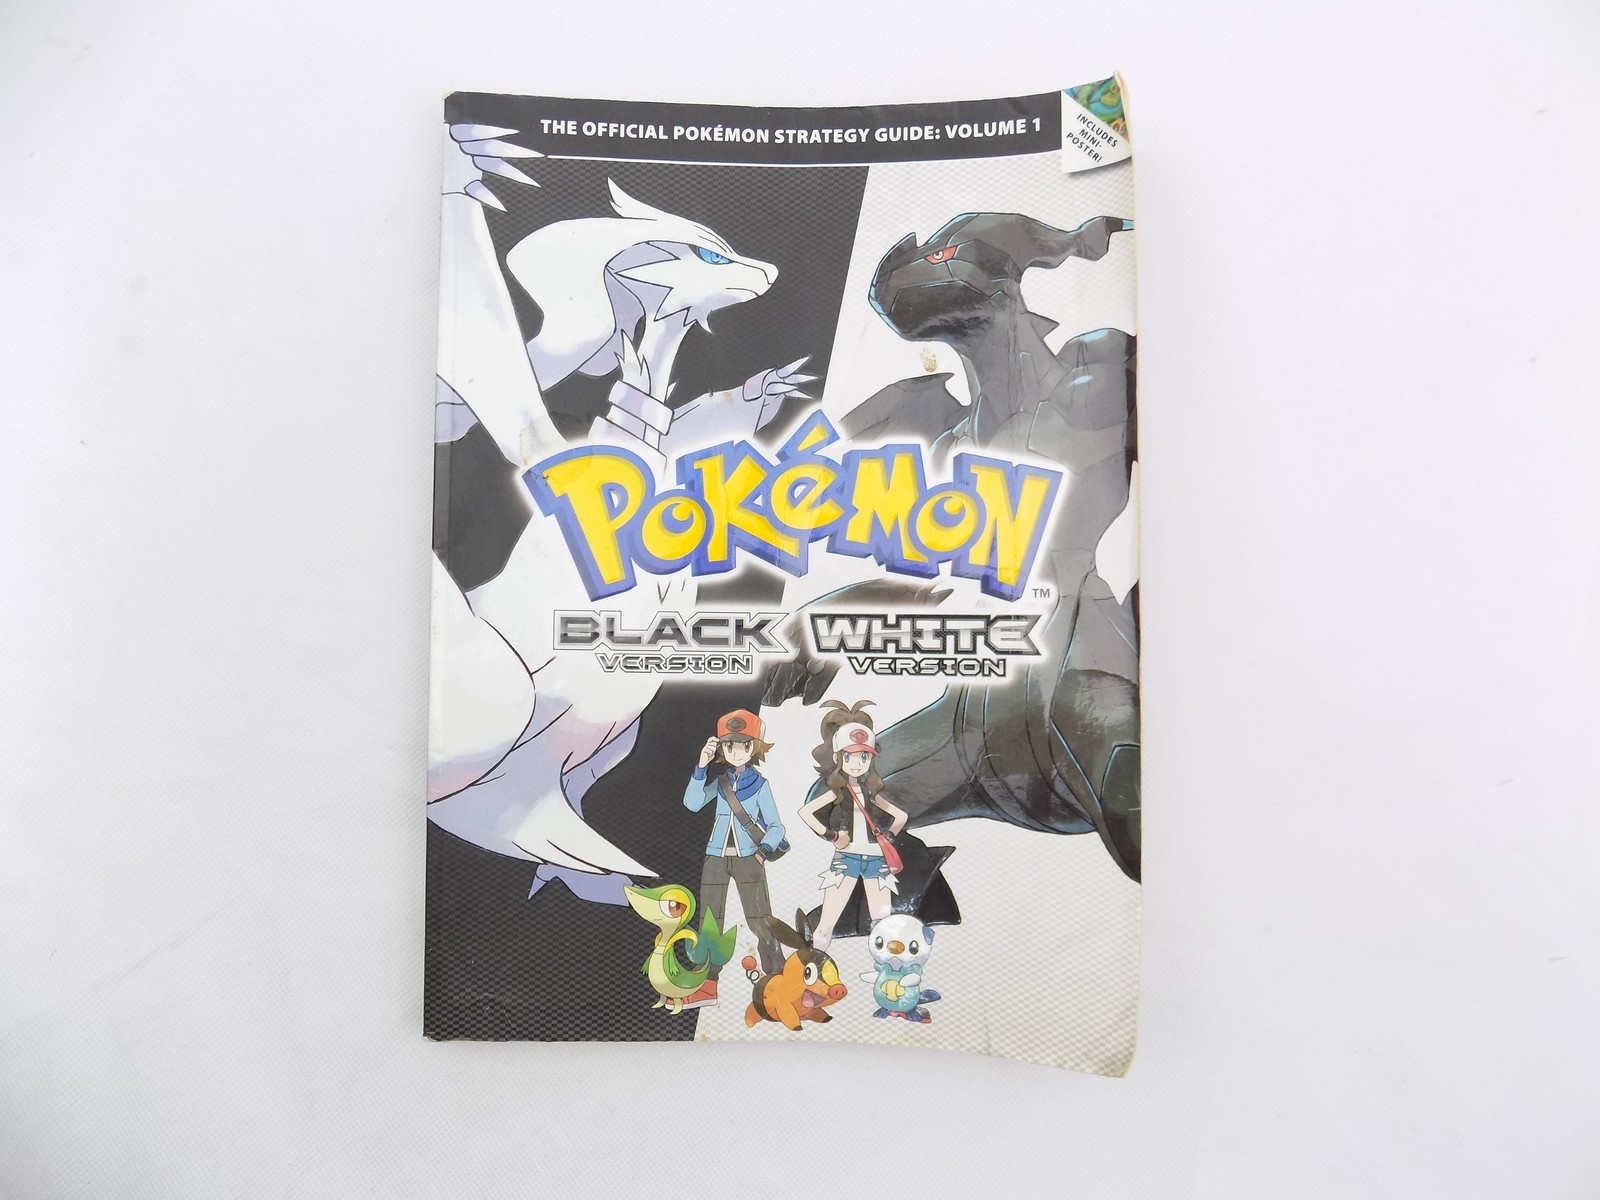 Pokemon Black Version & Pokemon White Version Volume 1: The Official Pokemon  Strategy Guide